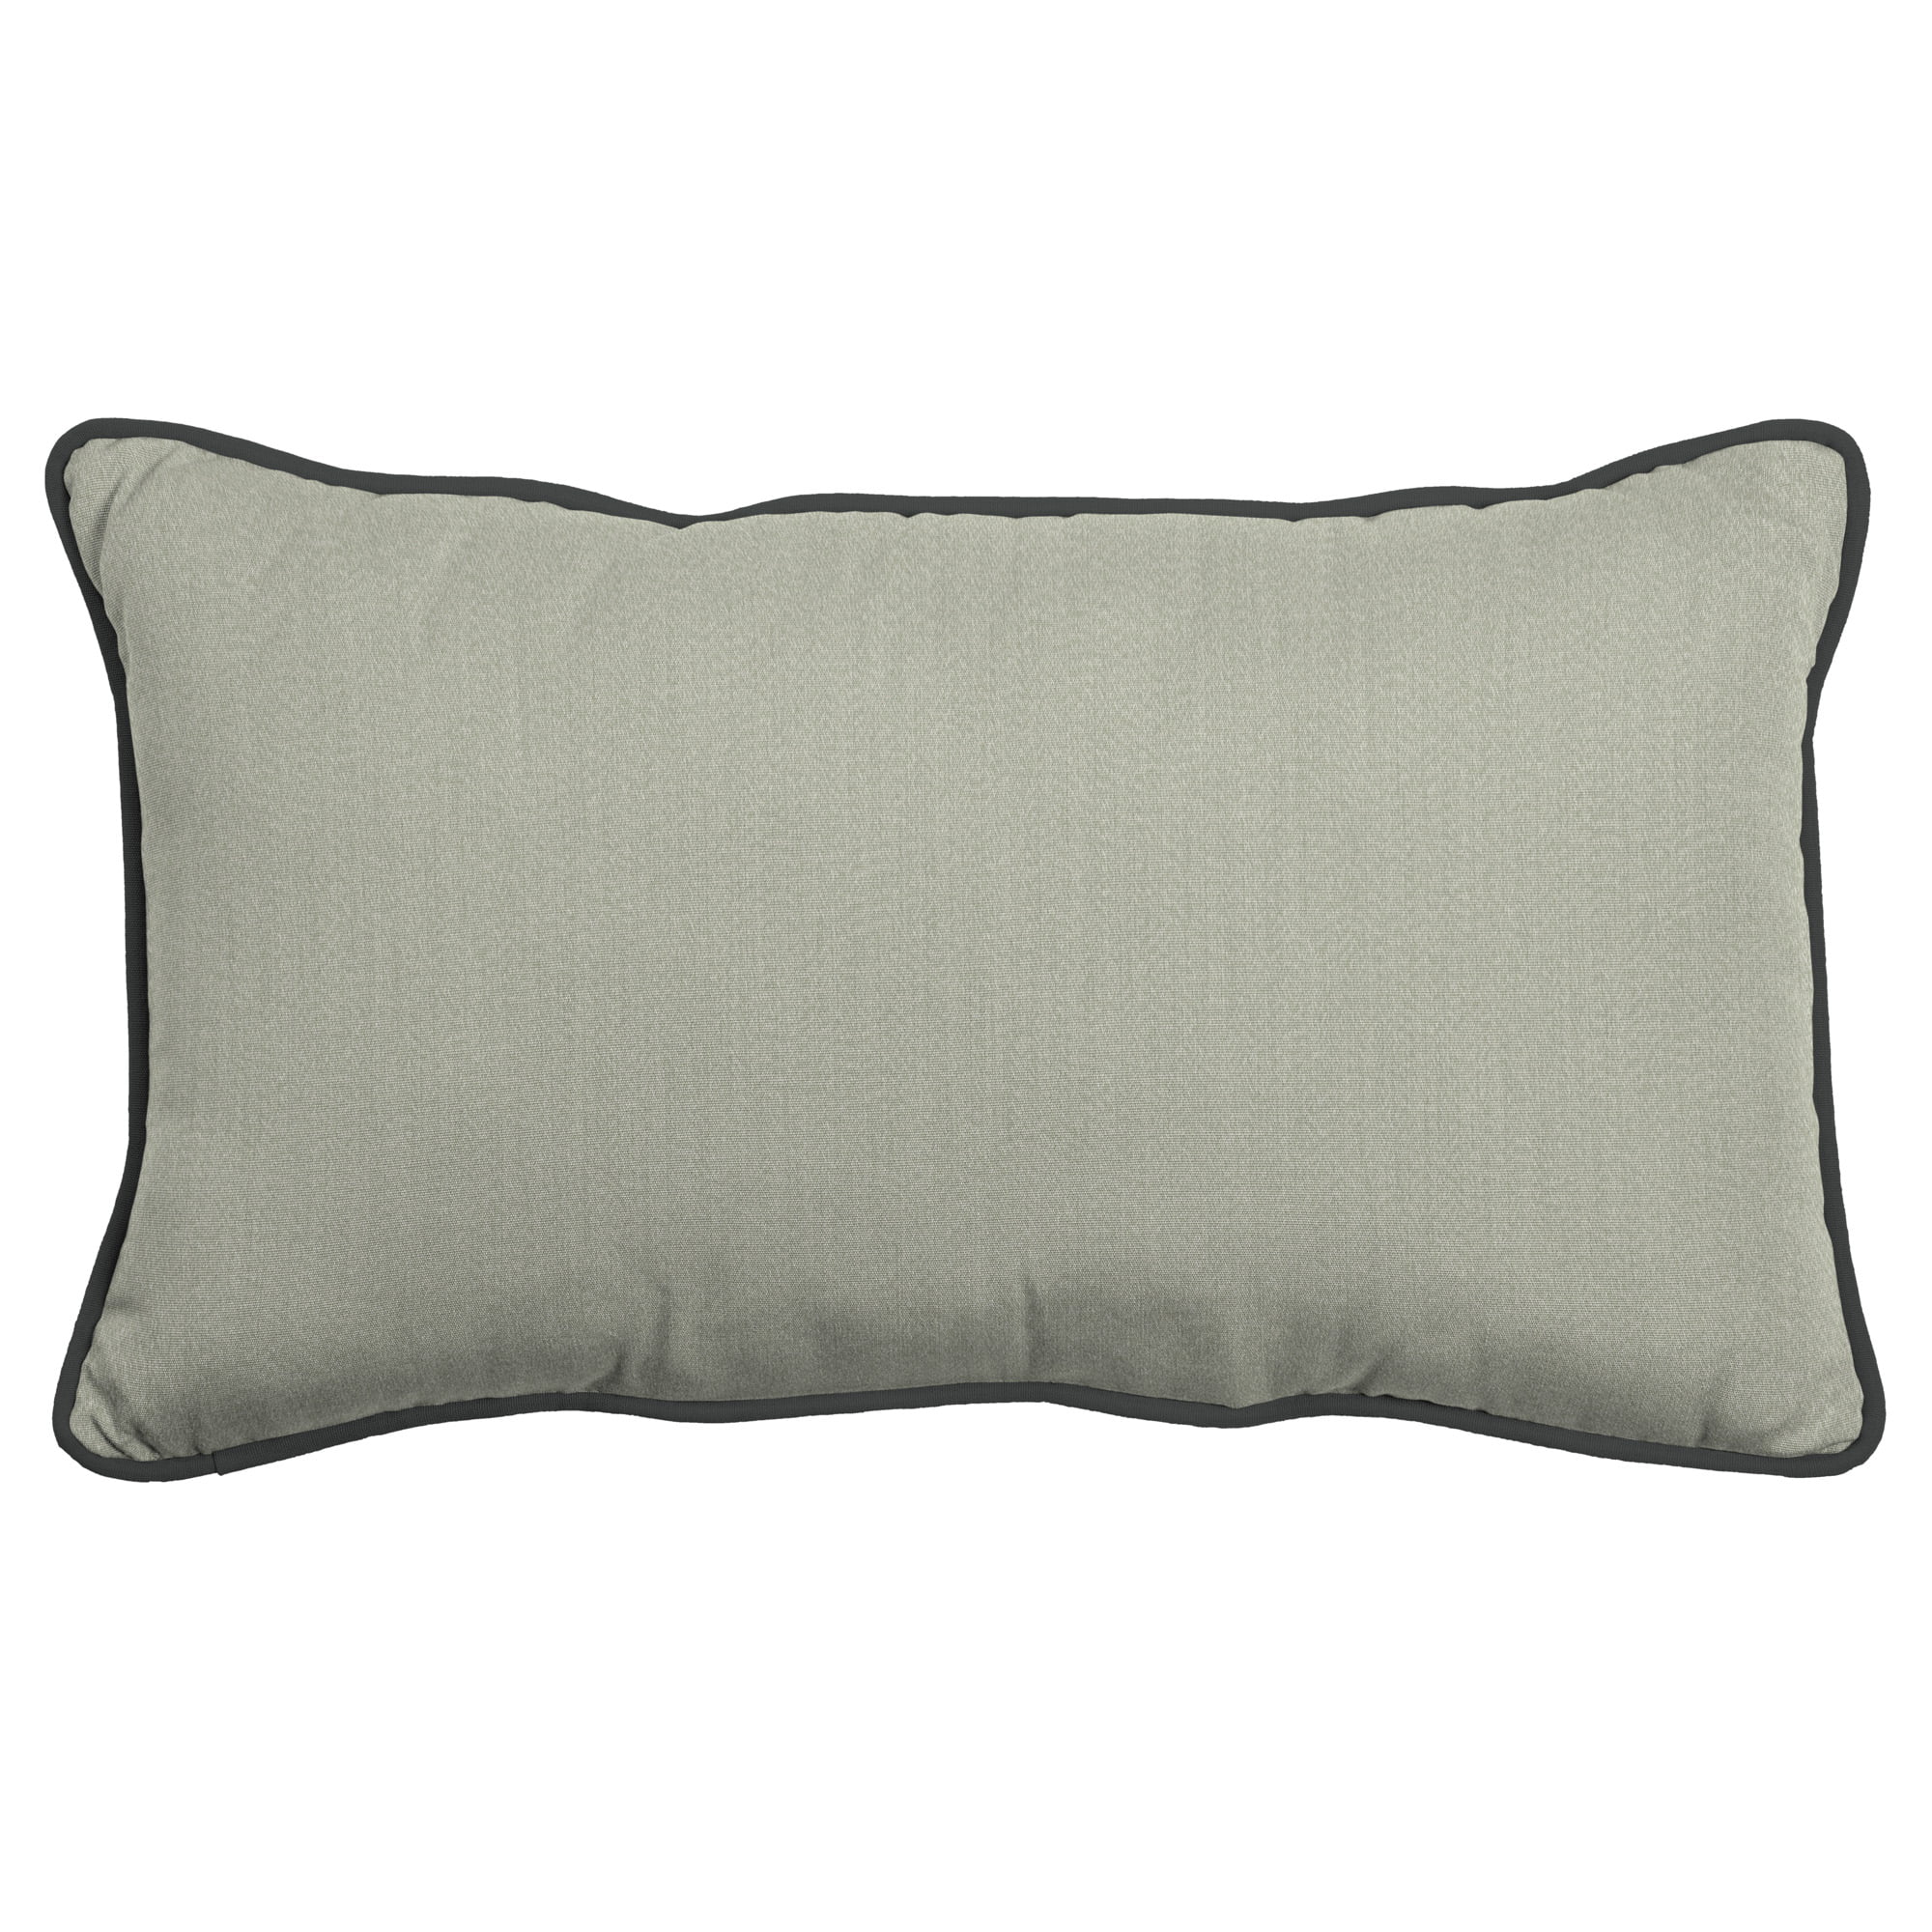 Chair Lumbar Pilow Navy Blue Pillow Case 10 X 24 Inches 24 X 60 Cm Pair Lumbar Cover Carpet Cushion Cover Lumbar Pillow